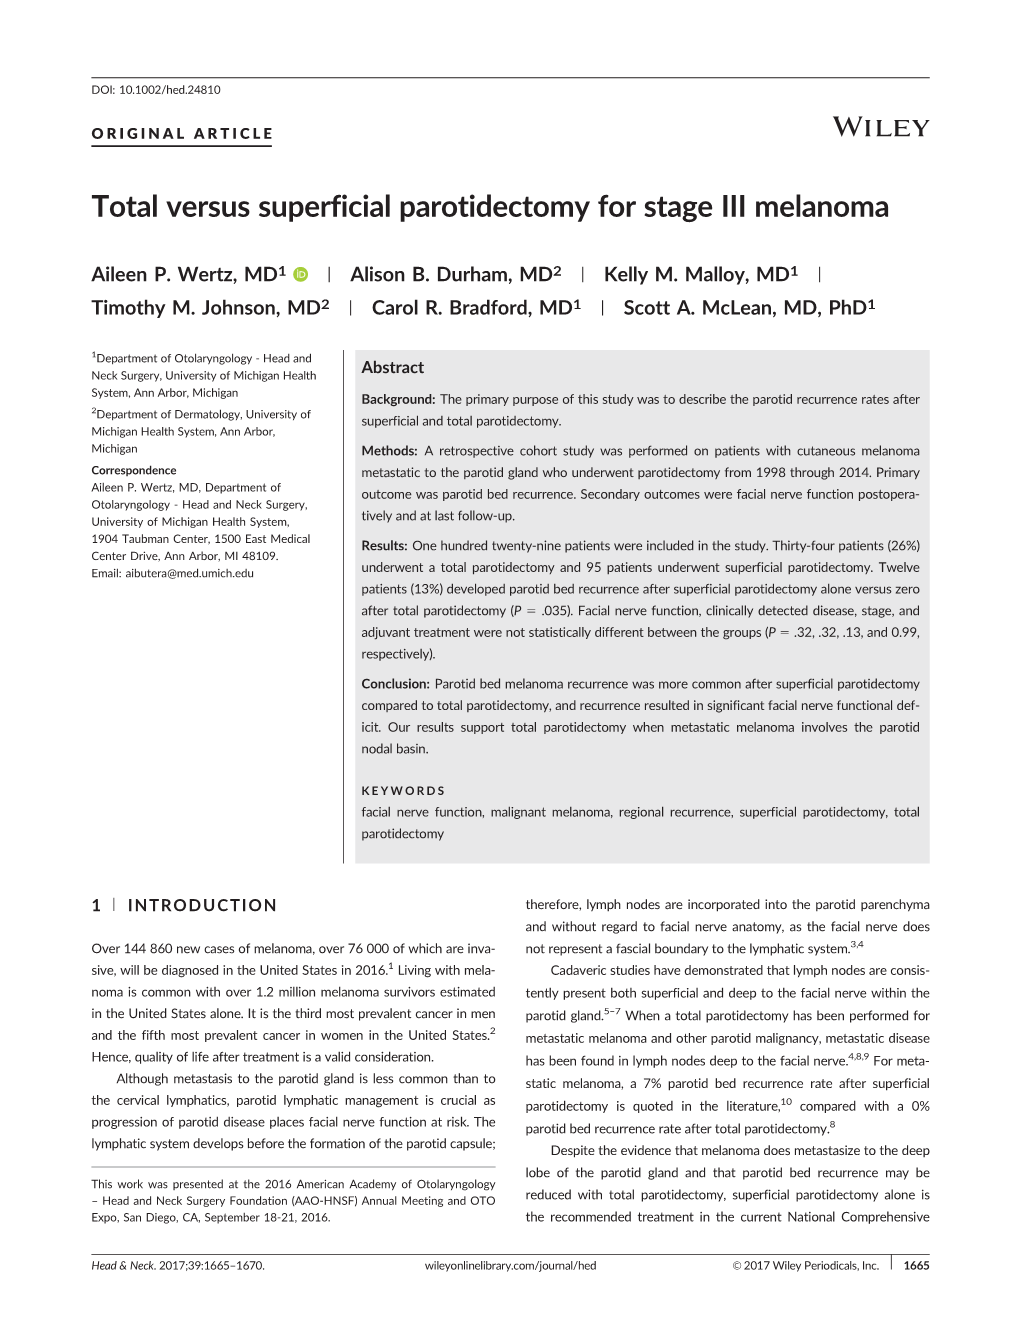 Total Versus Superficial Parotidectomy for Stage III Melanoma